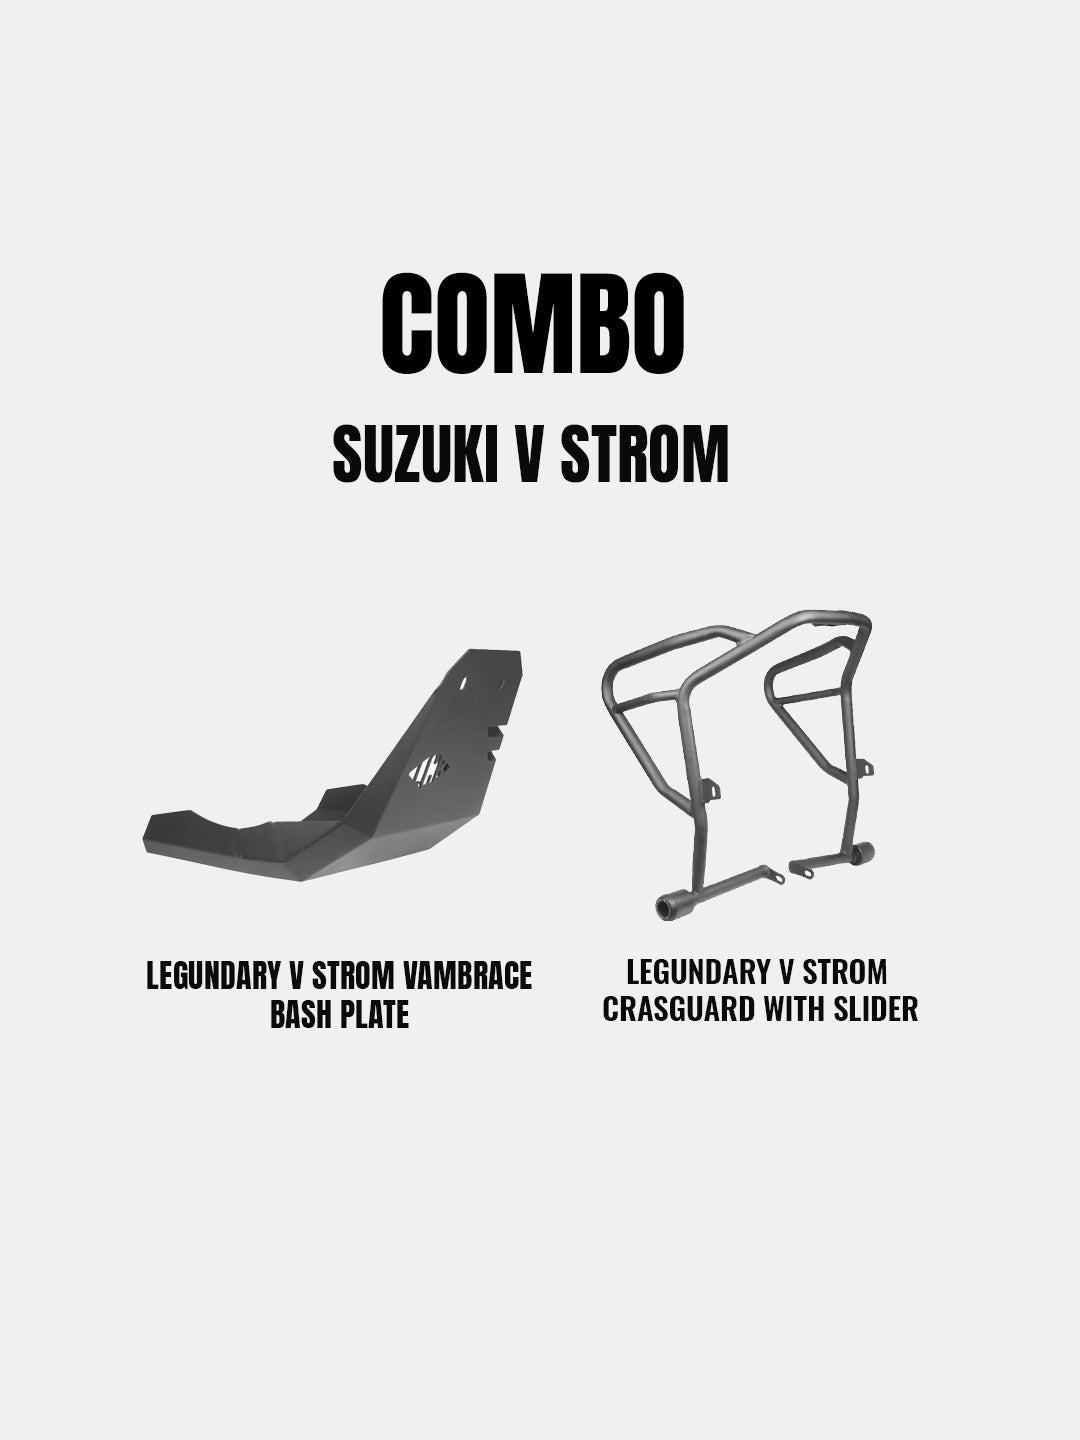 LEGUNDARY COMBO FOR SUZUKI V STROM - VAMBRACE BASH PLATE + ADRINEX CG WITH SLIDER